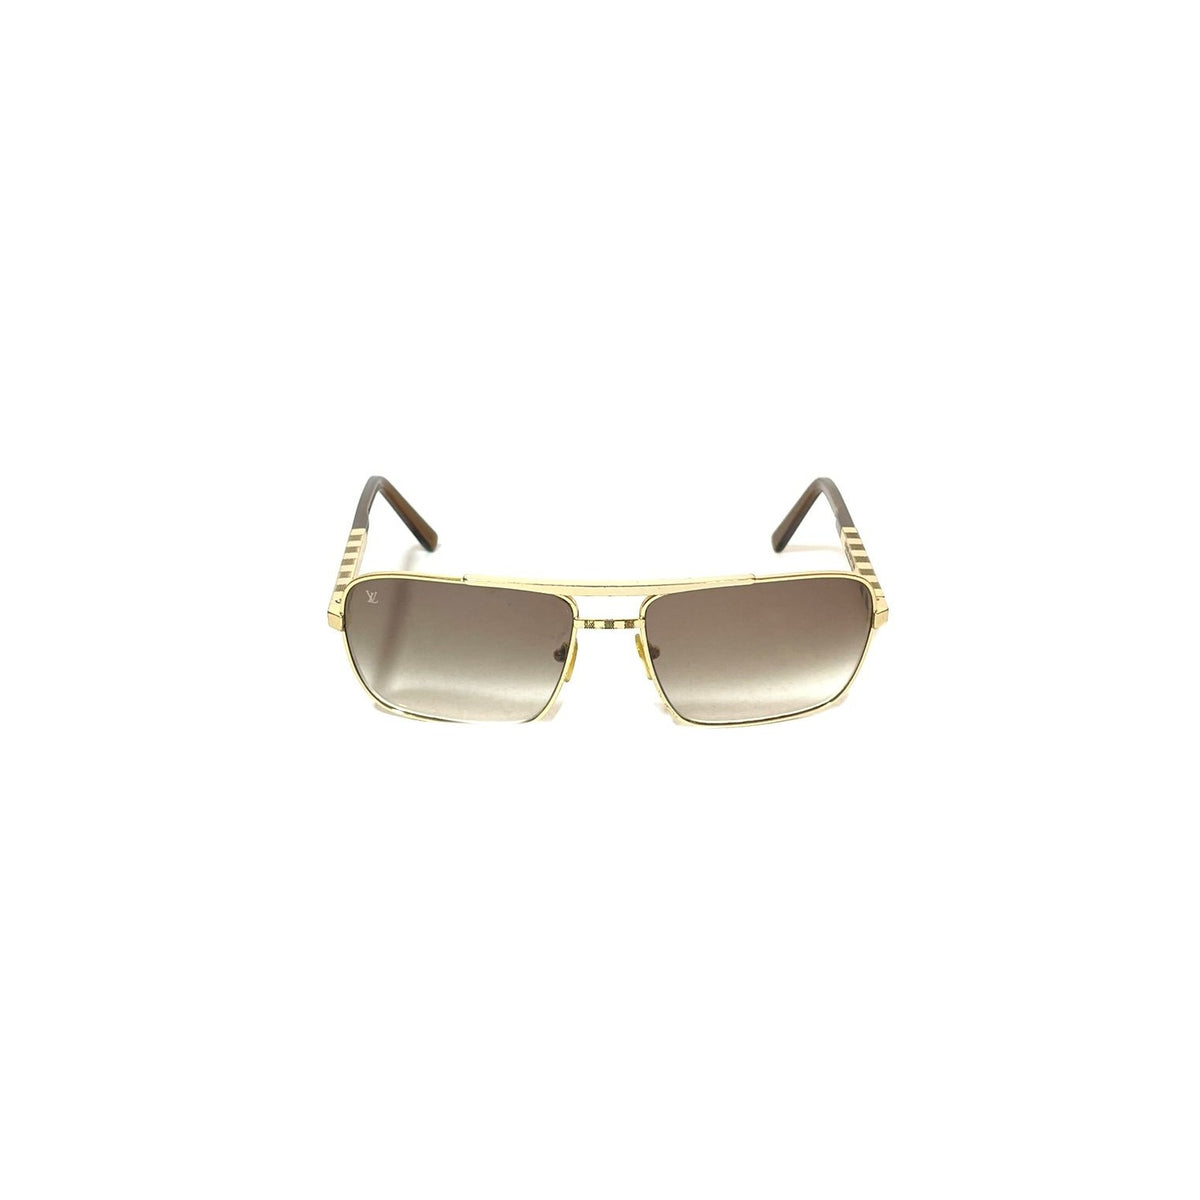 Louis Vuitton Attitude Sunglasses Gold Acetate & Metal. Size U